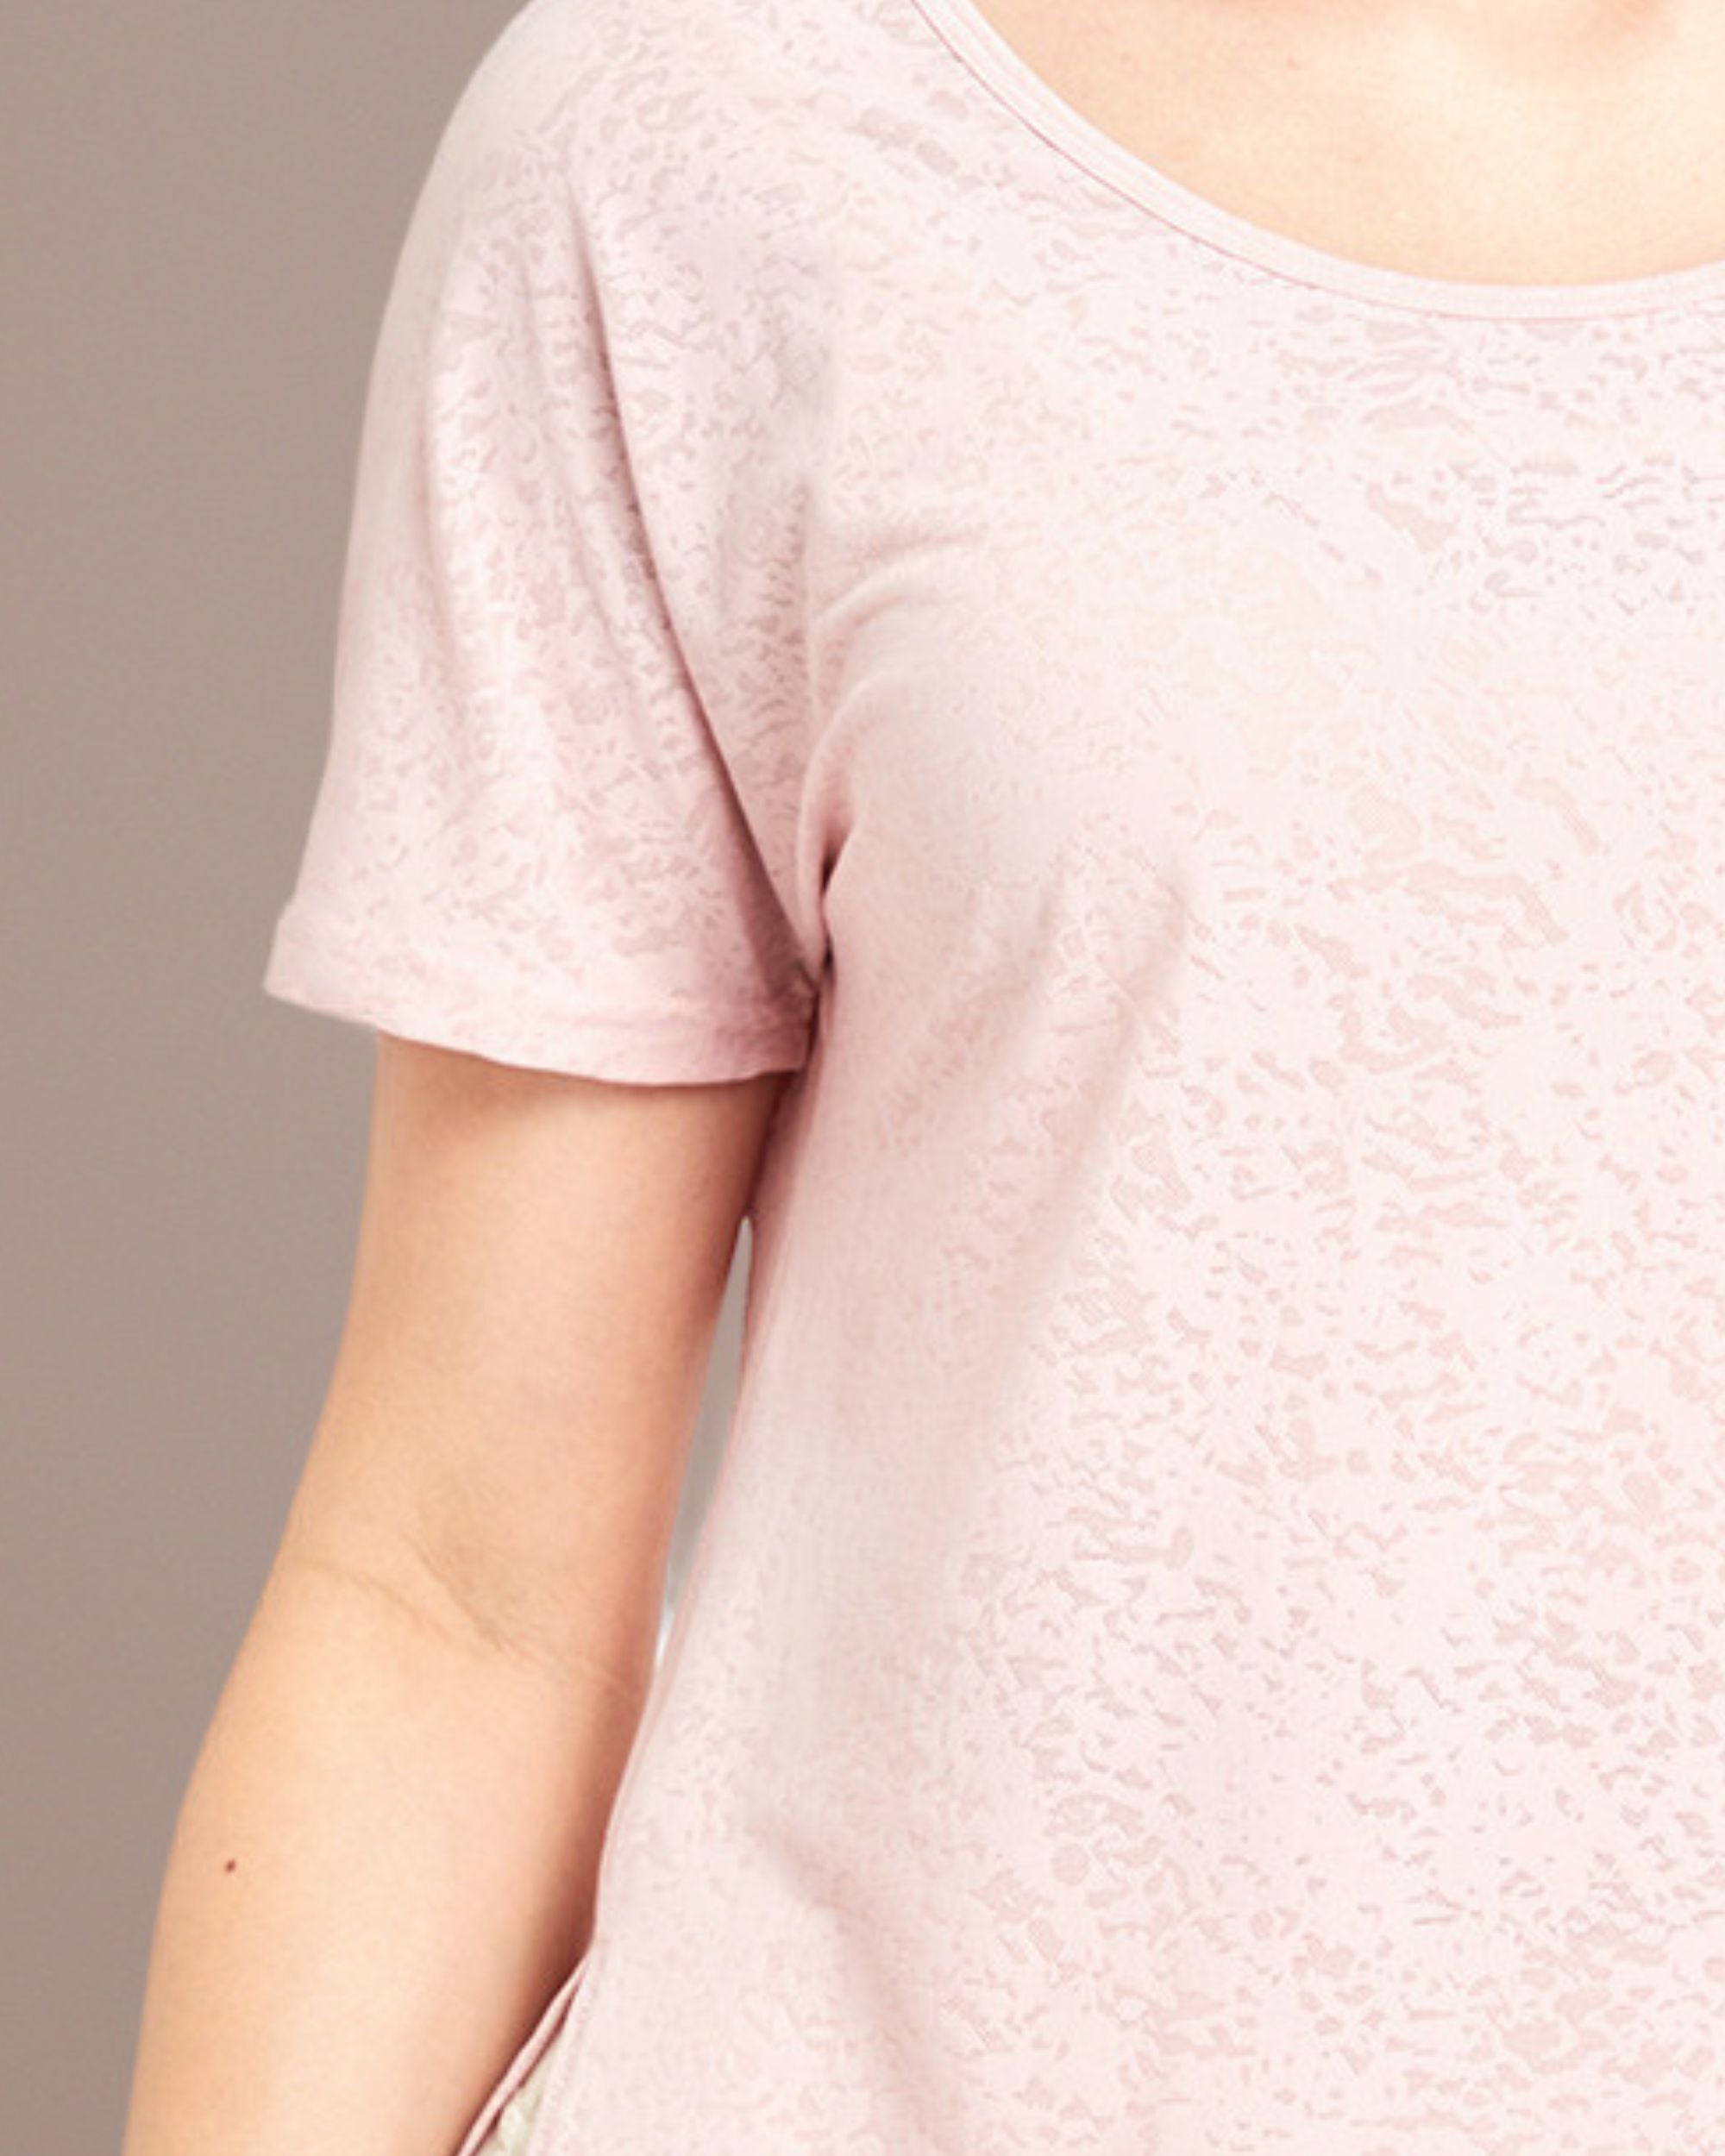 LeapSweep Ladies T-Shirt - Pink - THUGFIT